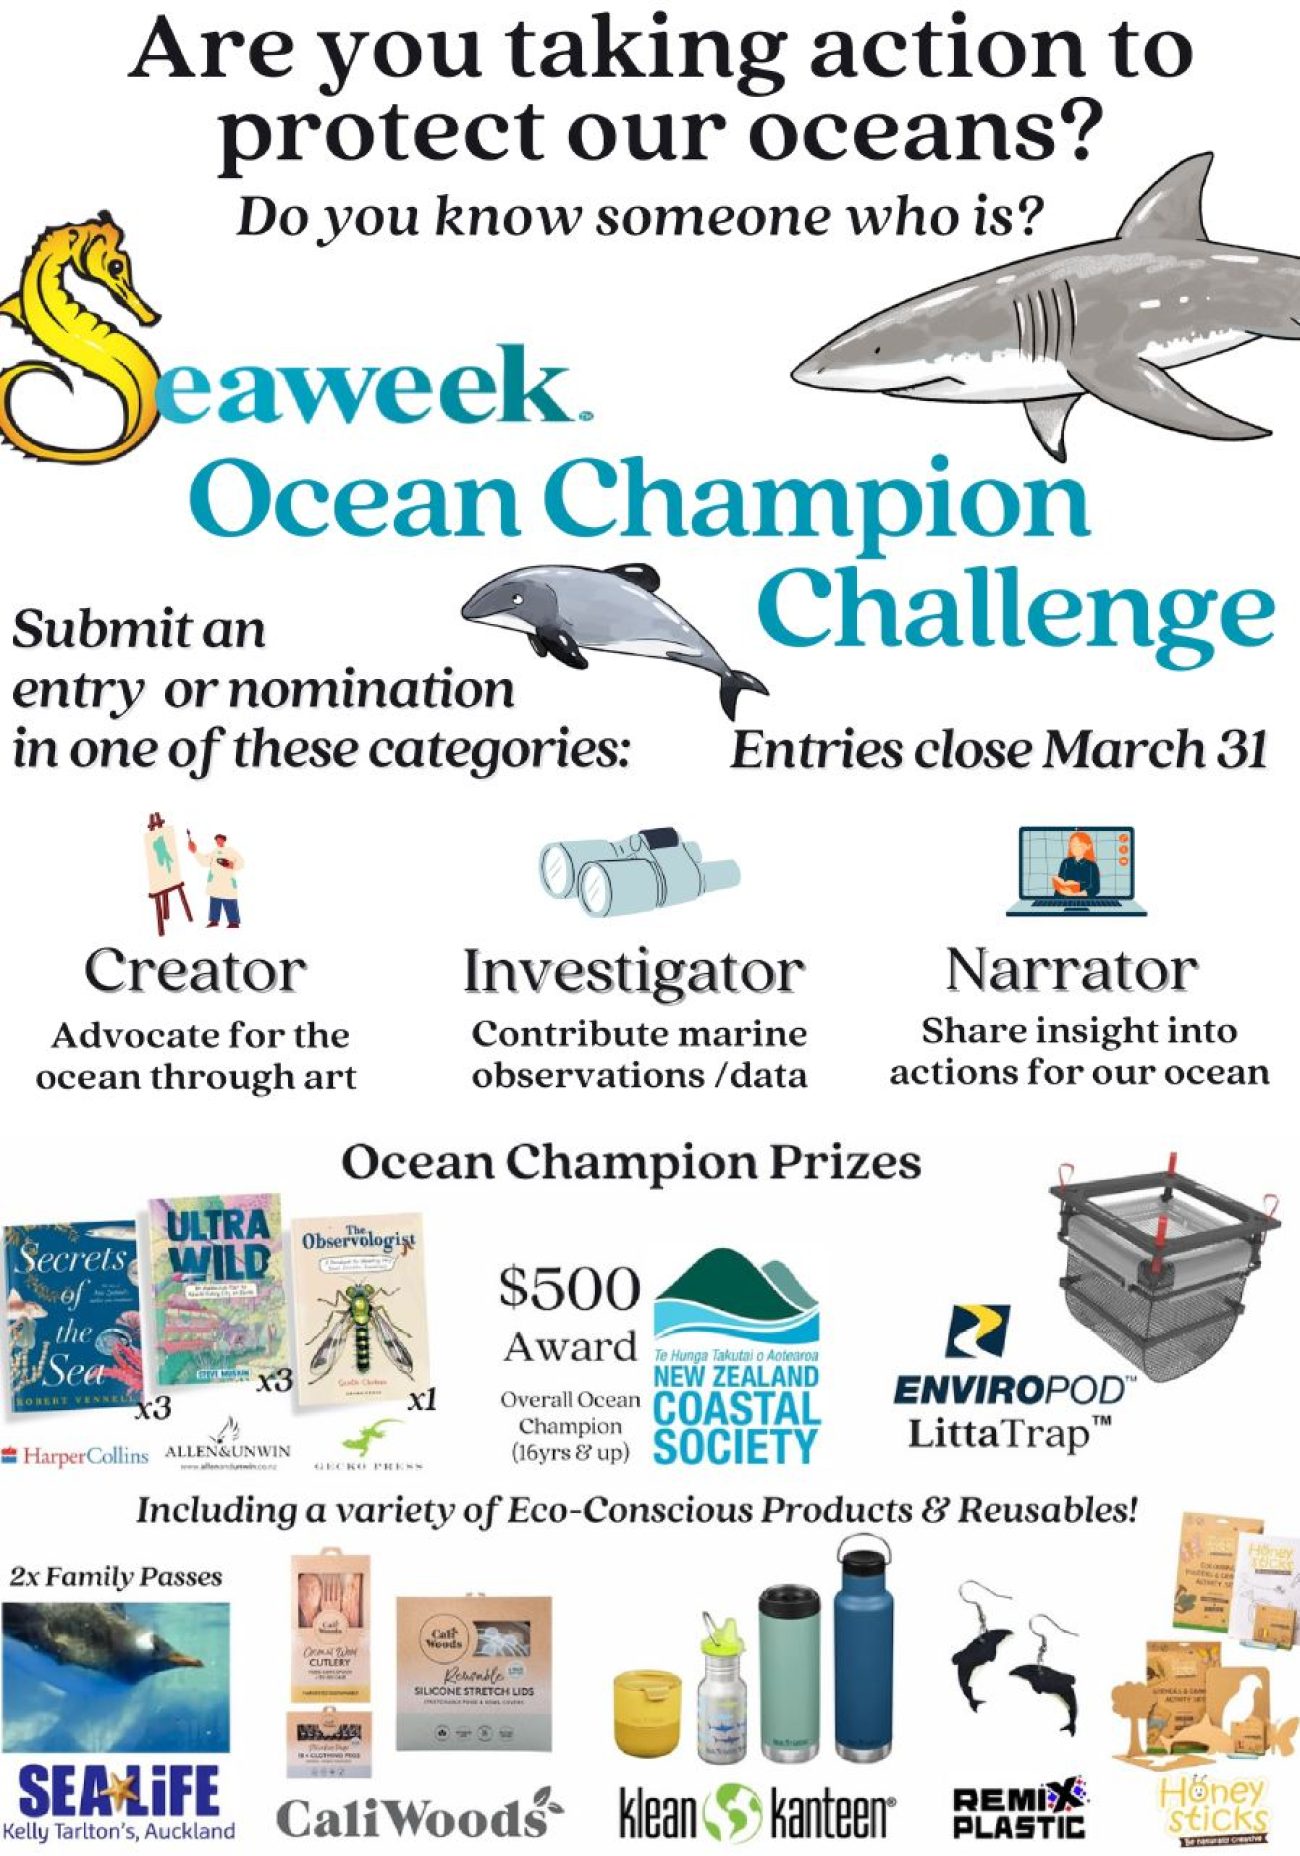 Sea Week – Ocean Champion Challenge